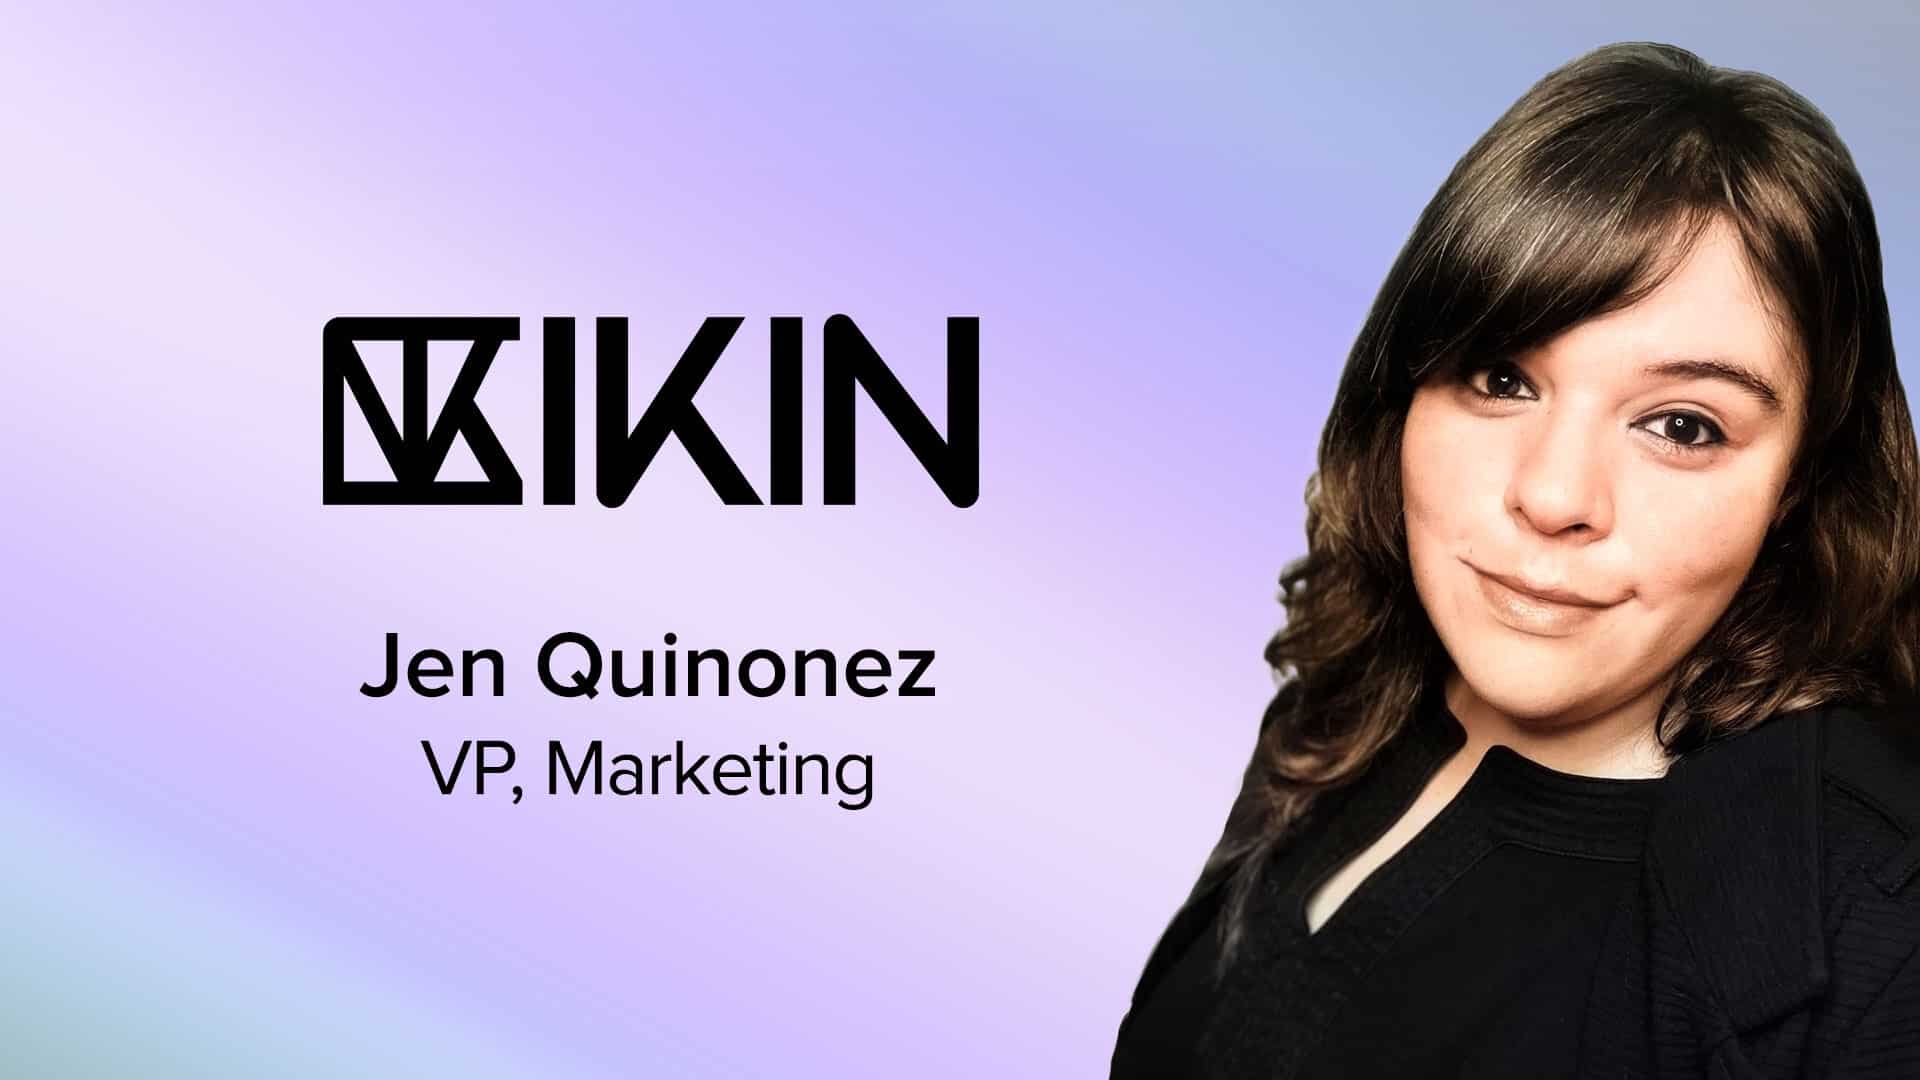 IKIN Vice President of Marketing, Jen Quinonez